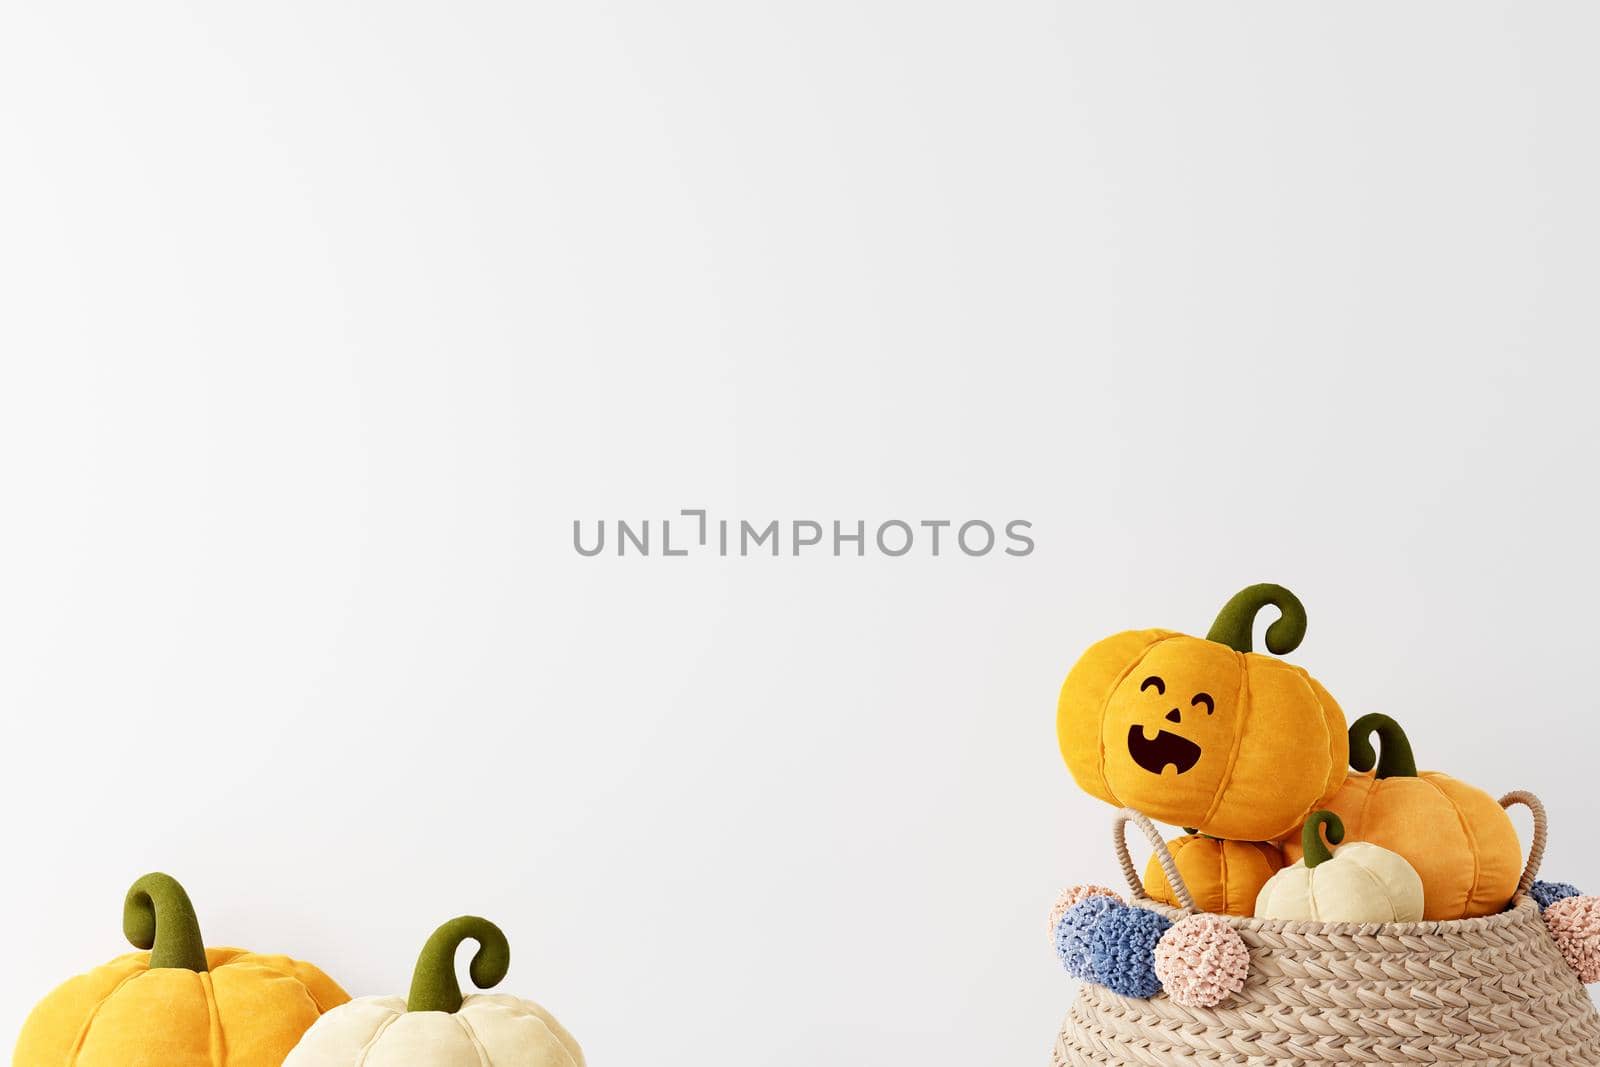 Halloween copyspace background with pumpkins in basket on white background, smiling pumpkin face, 3D rendering, Halloween theme with pumpkins in woven basket on white background 3D illustration.